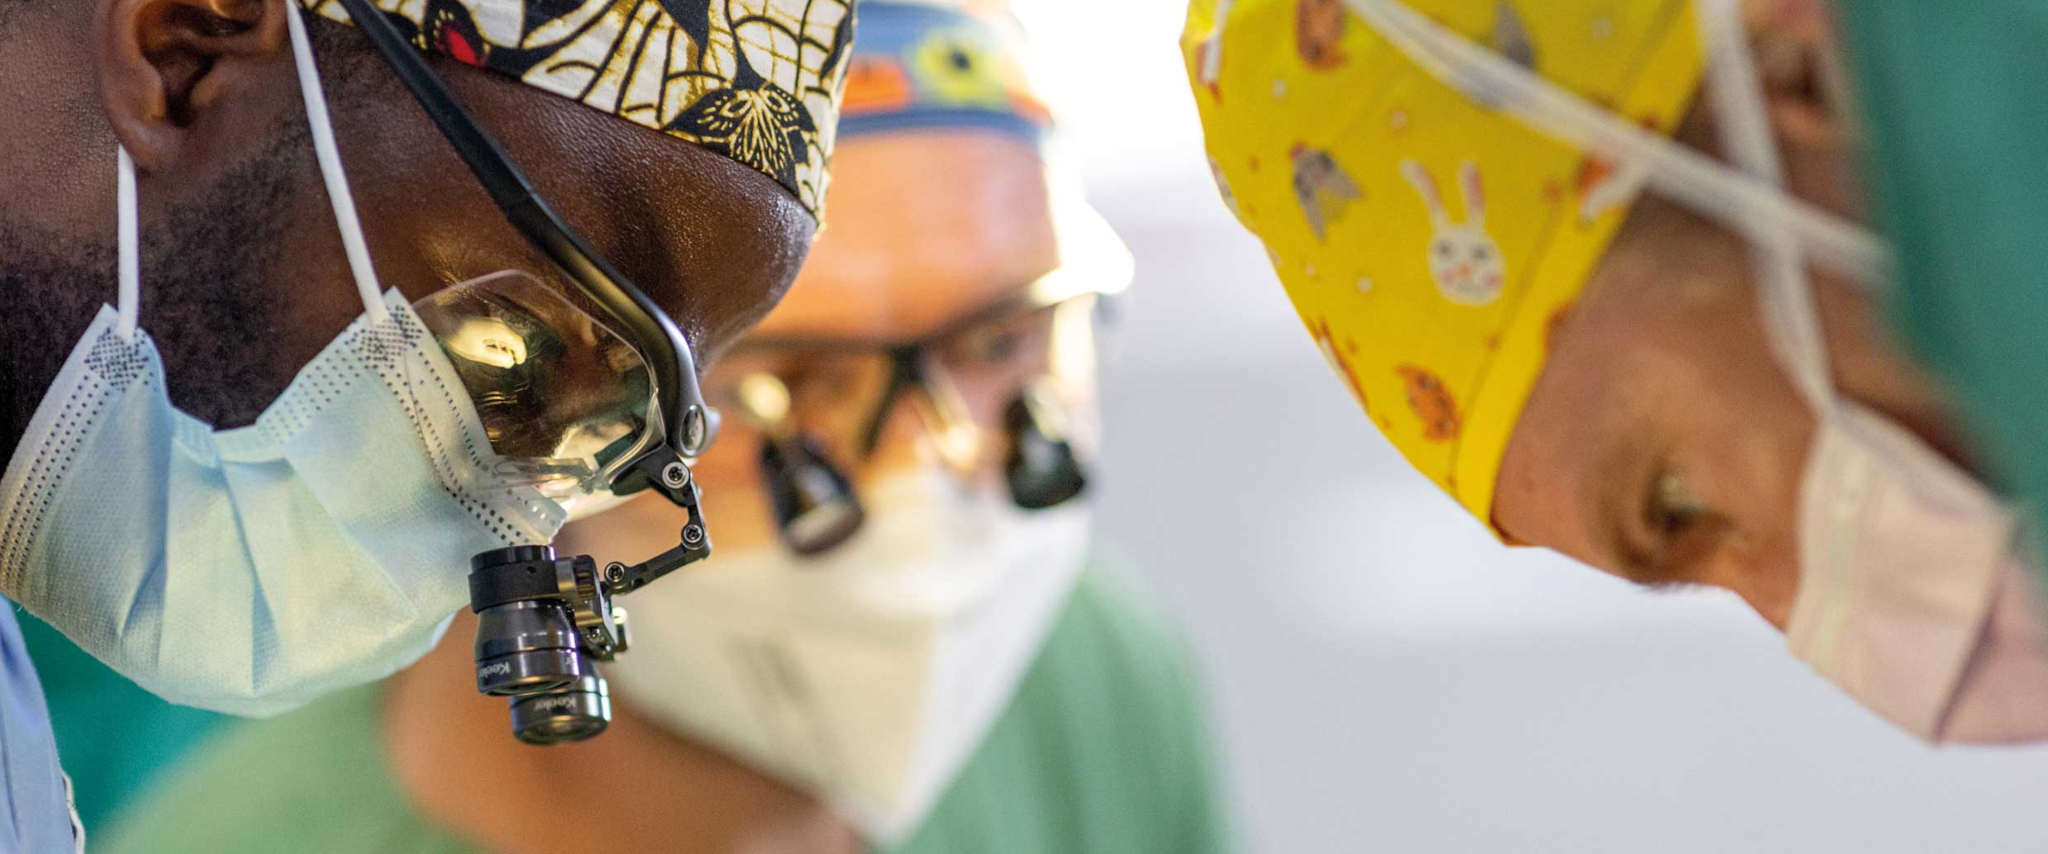 Bonner Arzt hilft Verbrennungsopfern in Ostafrika